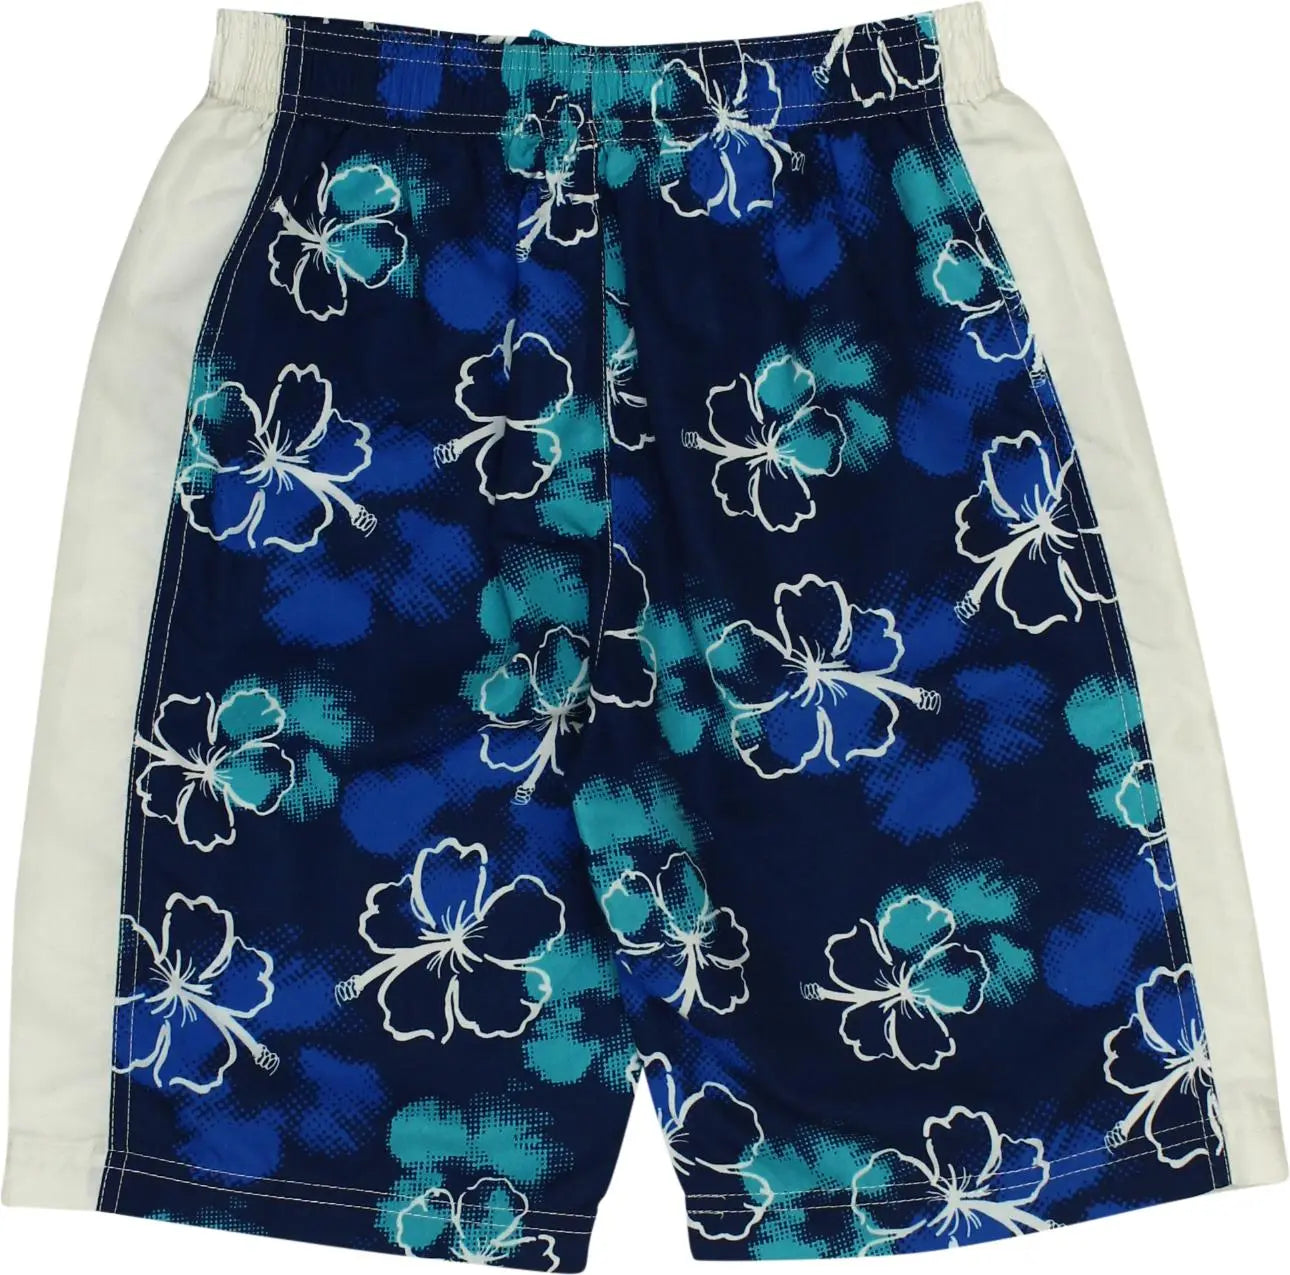 Zeeman - Swim Shorts- ThriftTale.com - Vintage and second handclothing